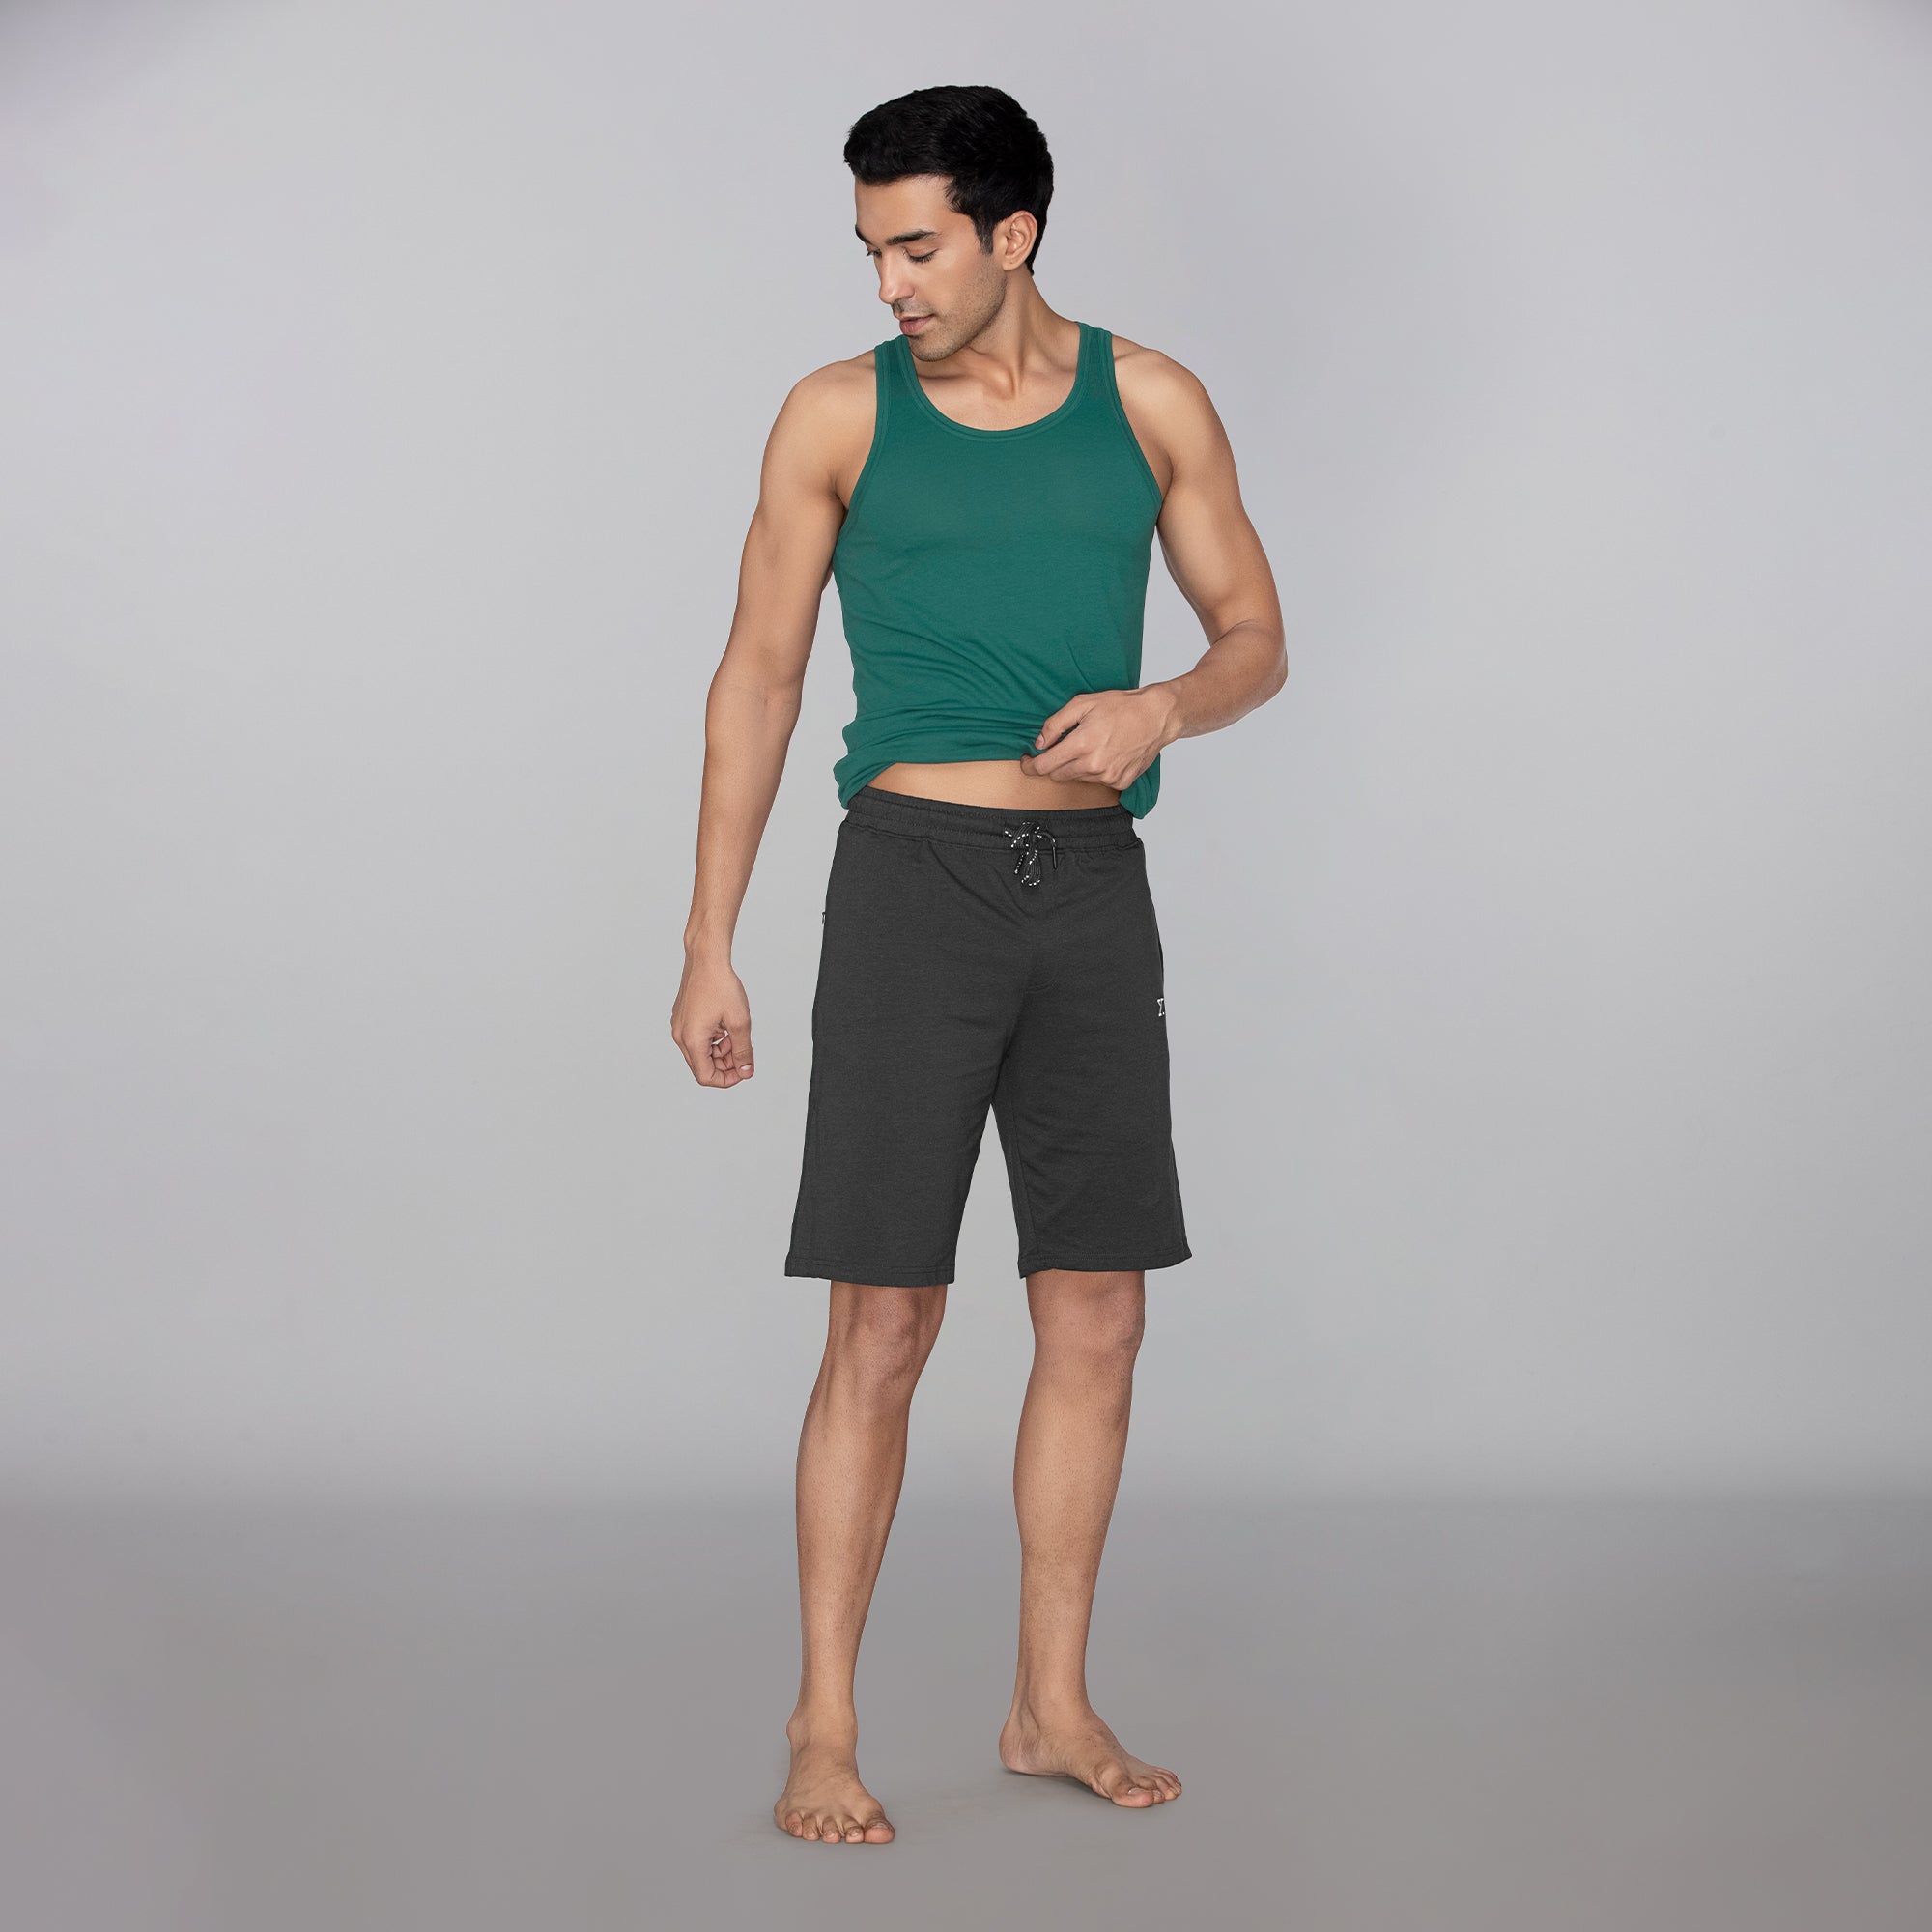 Ace Modal-Cotton Shorts For Men Graphite Grey - XYXX Mens Apparels